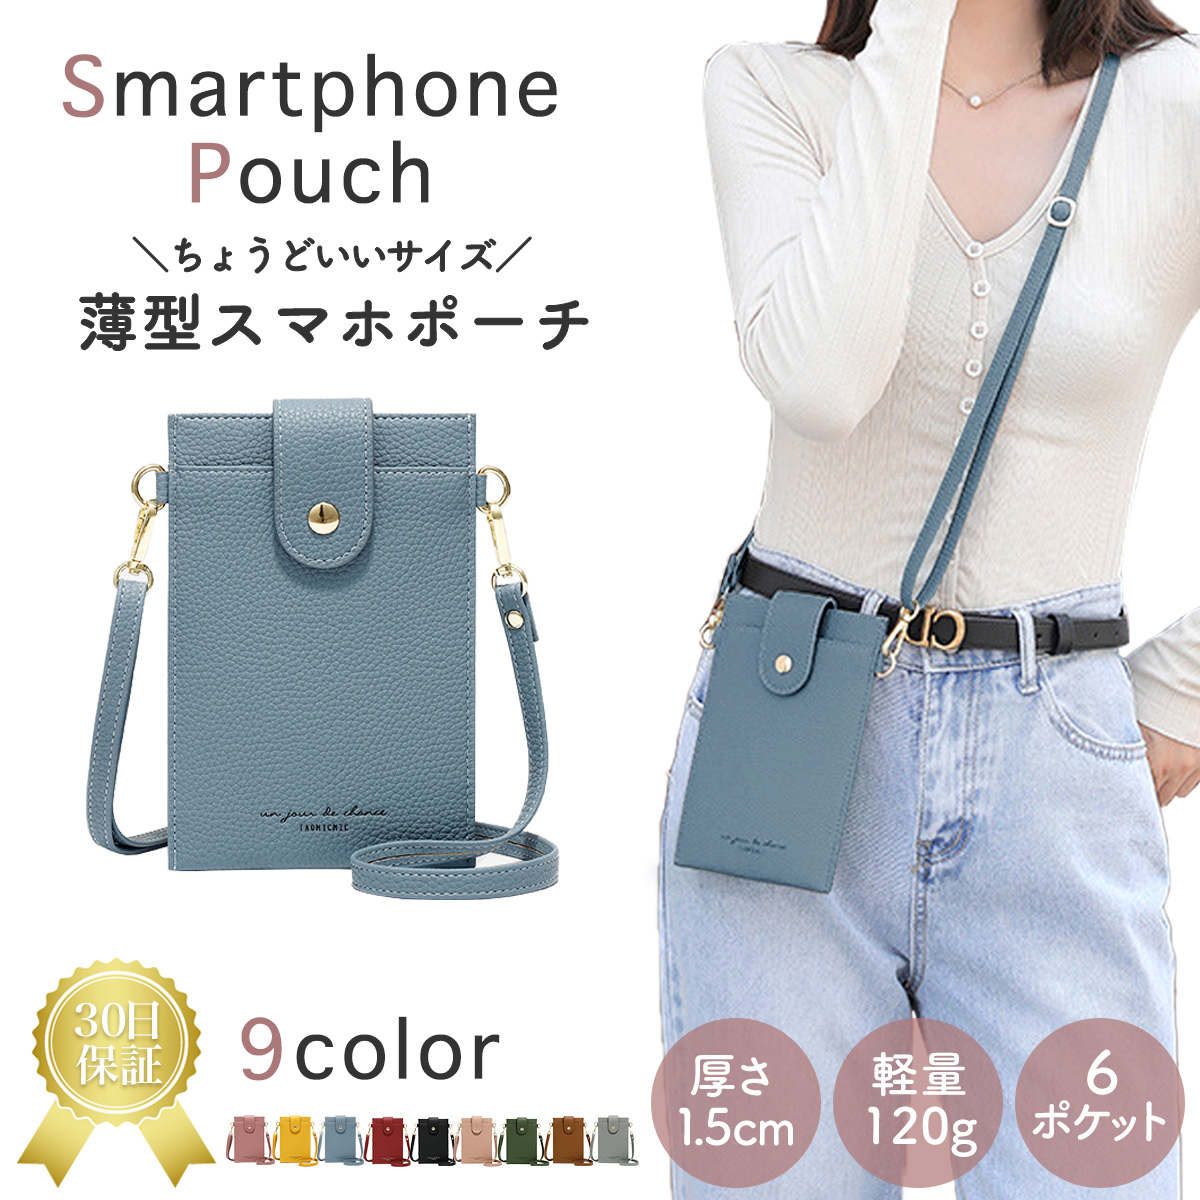  smartphone shoulder purse attaching purse smartphone shoulder bag leather smartphone shoulder pouch lady's smartphone pouch smartphone shoulder 